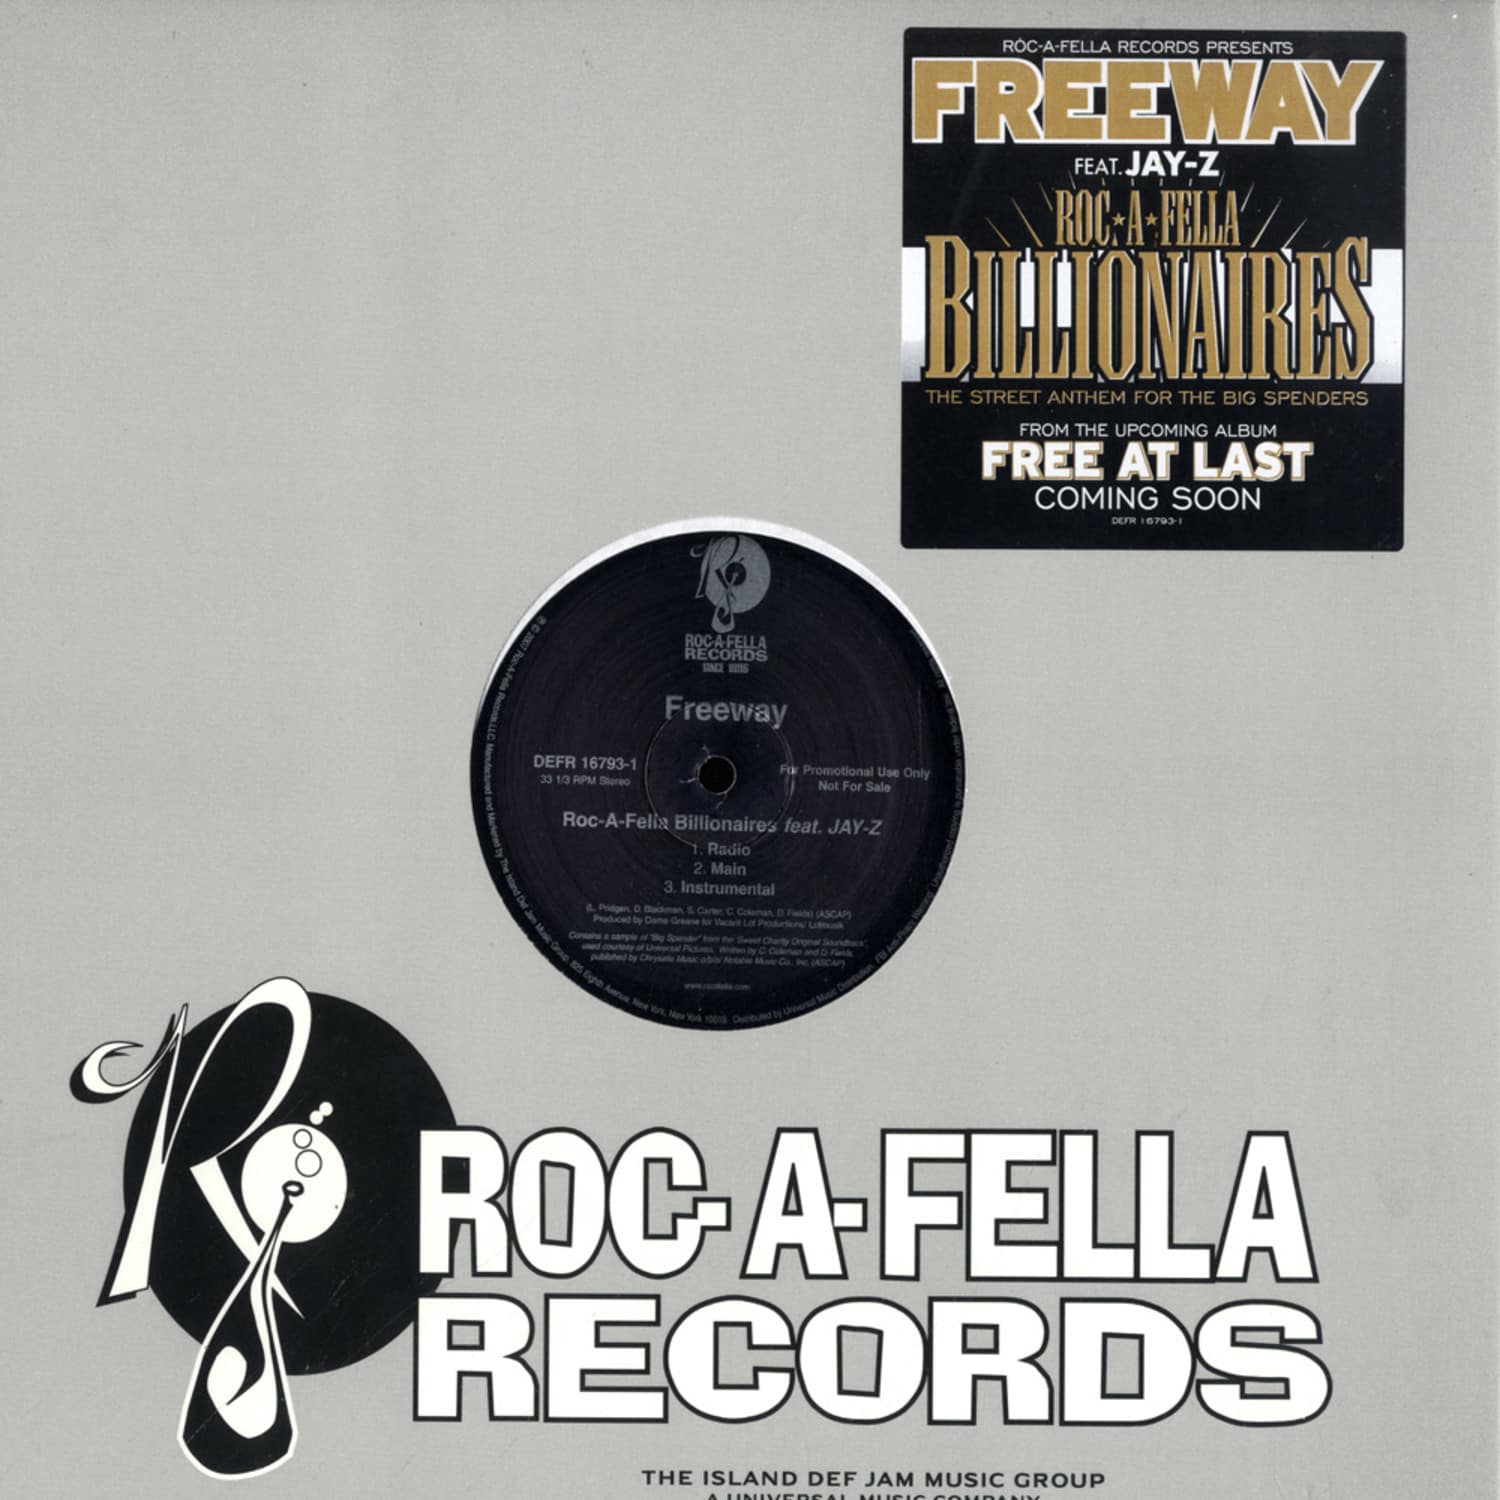 Freeway feat. Jay Z - ROC-A-FELLA BILLIONAIRES